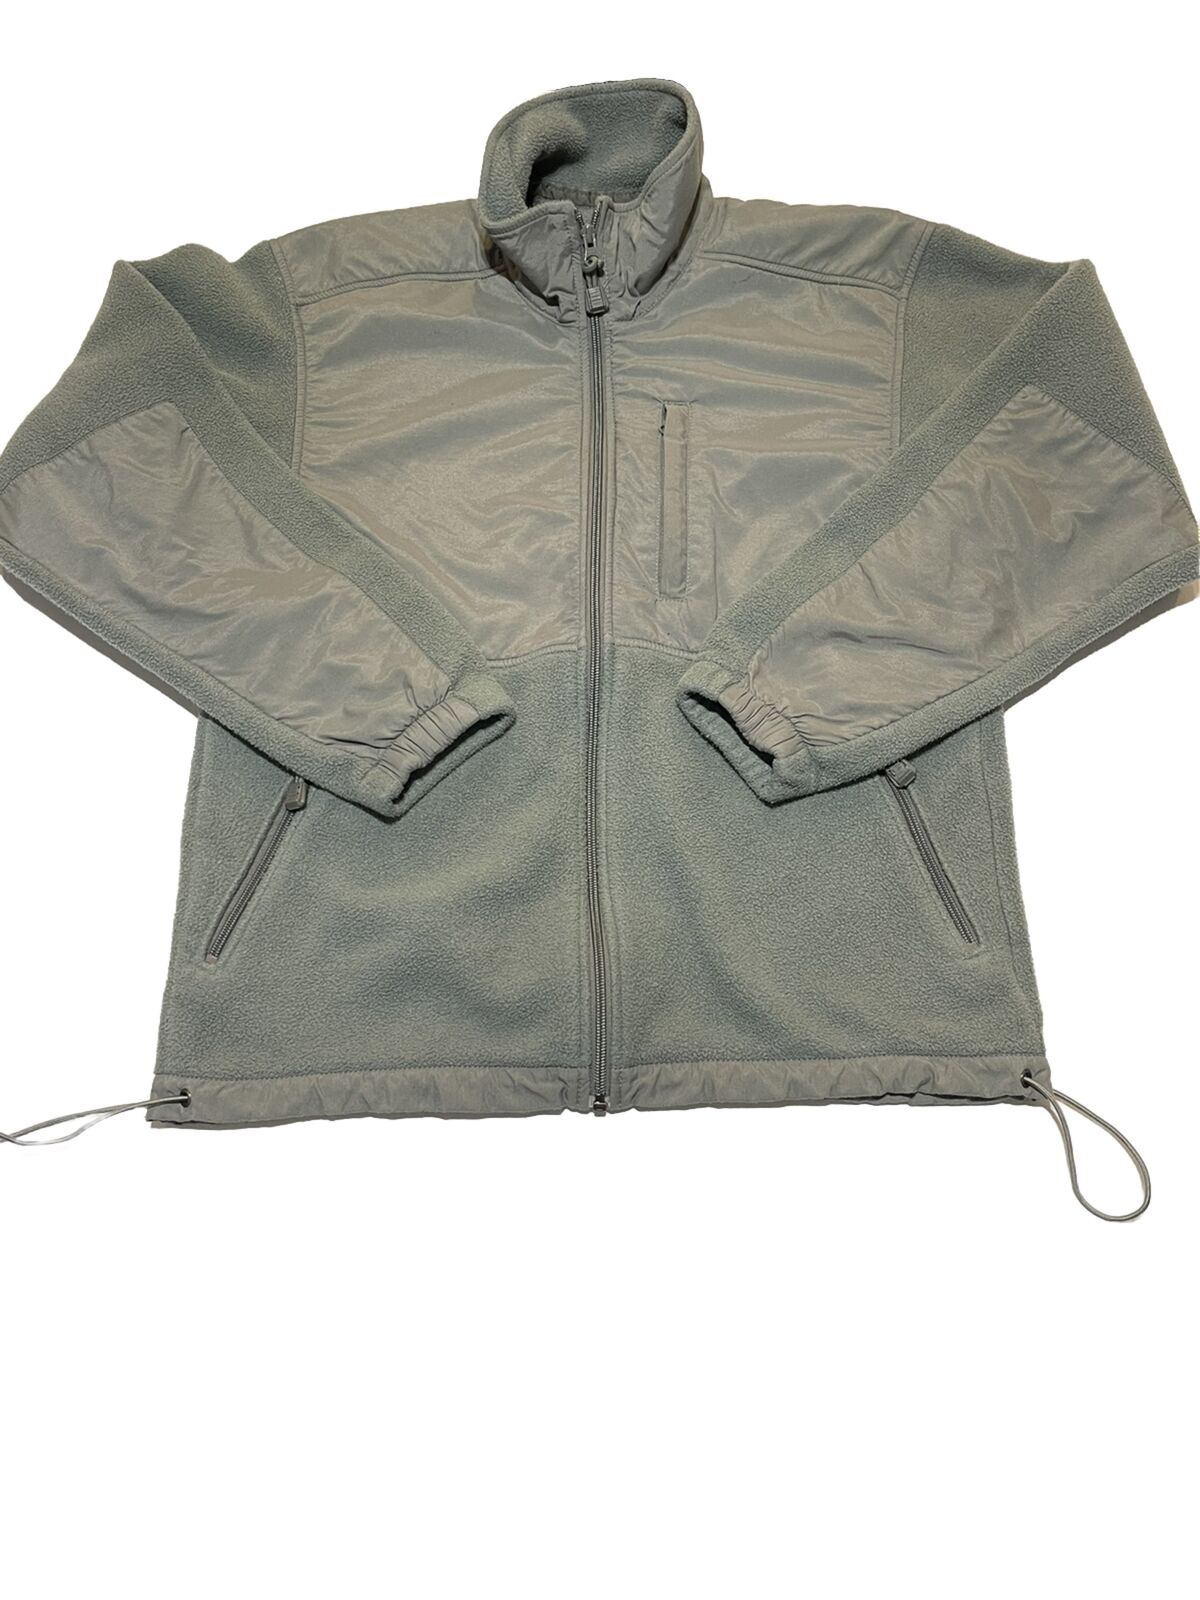 TACTICAL TAILOR Polar Tech Fleece Jacket Liner Sz Large Olive Drab Full Zip